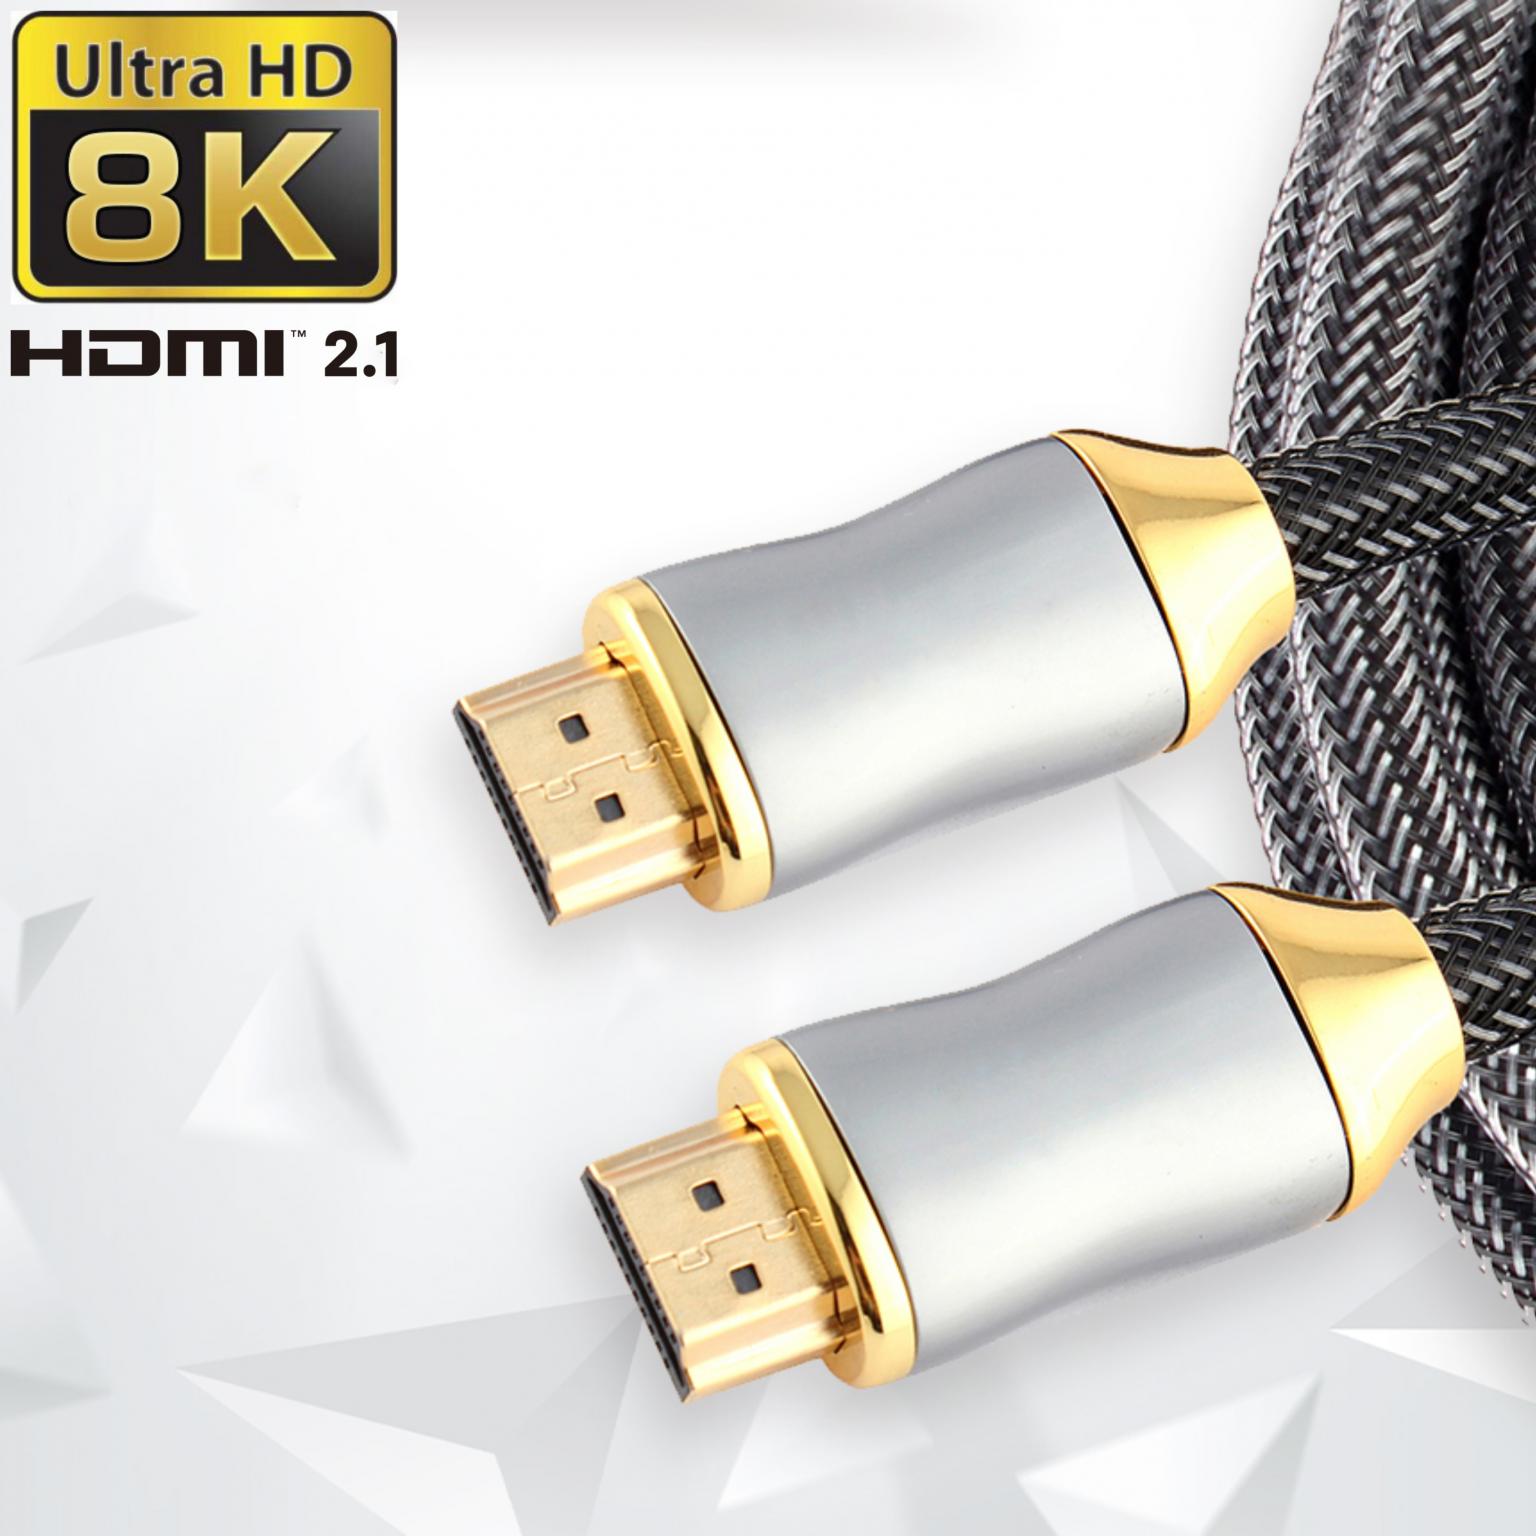 Maria Baffle bitter HDMI kabel - Versie: 2.1 - Ultra High Speed, Verguld: Ja, Aansluiting 1:  HDMI A male, Aansluiting 2: HDMI A male, Lengte: 0.5 meter.